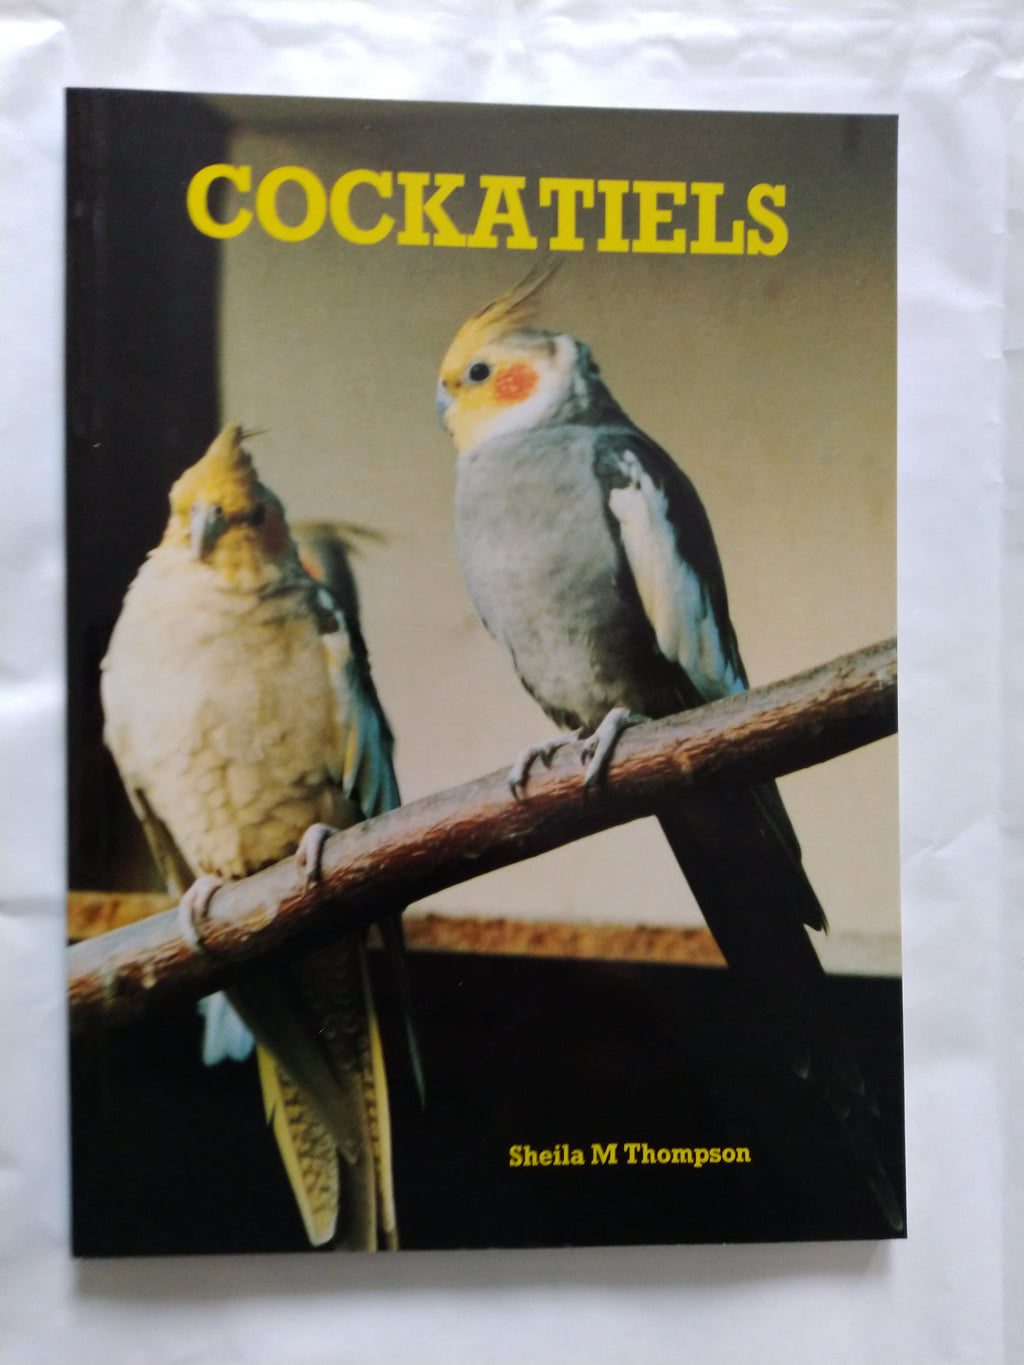 Cockatiels by Sheila M Thompson